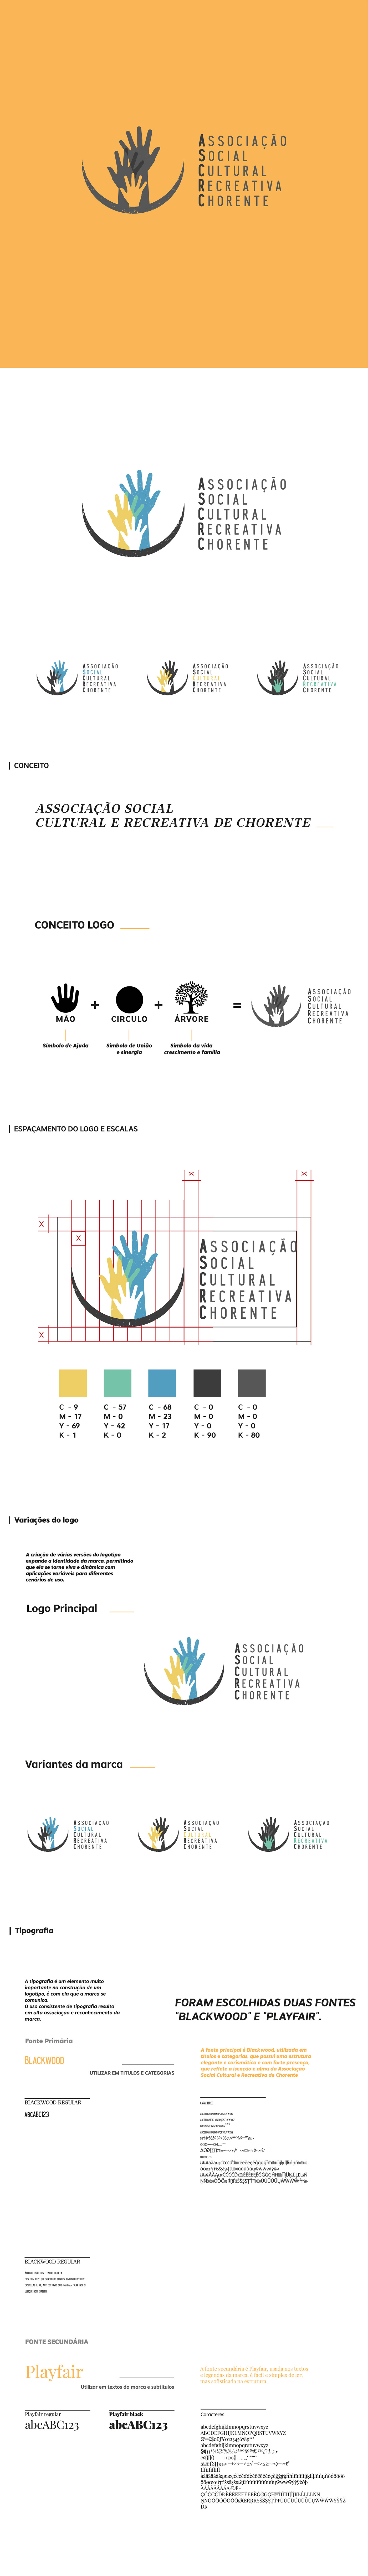 Association branding  charity identity Logo Design social